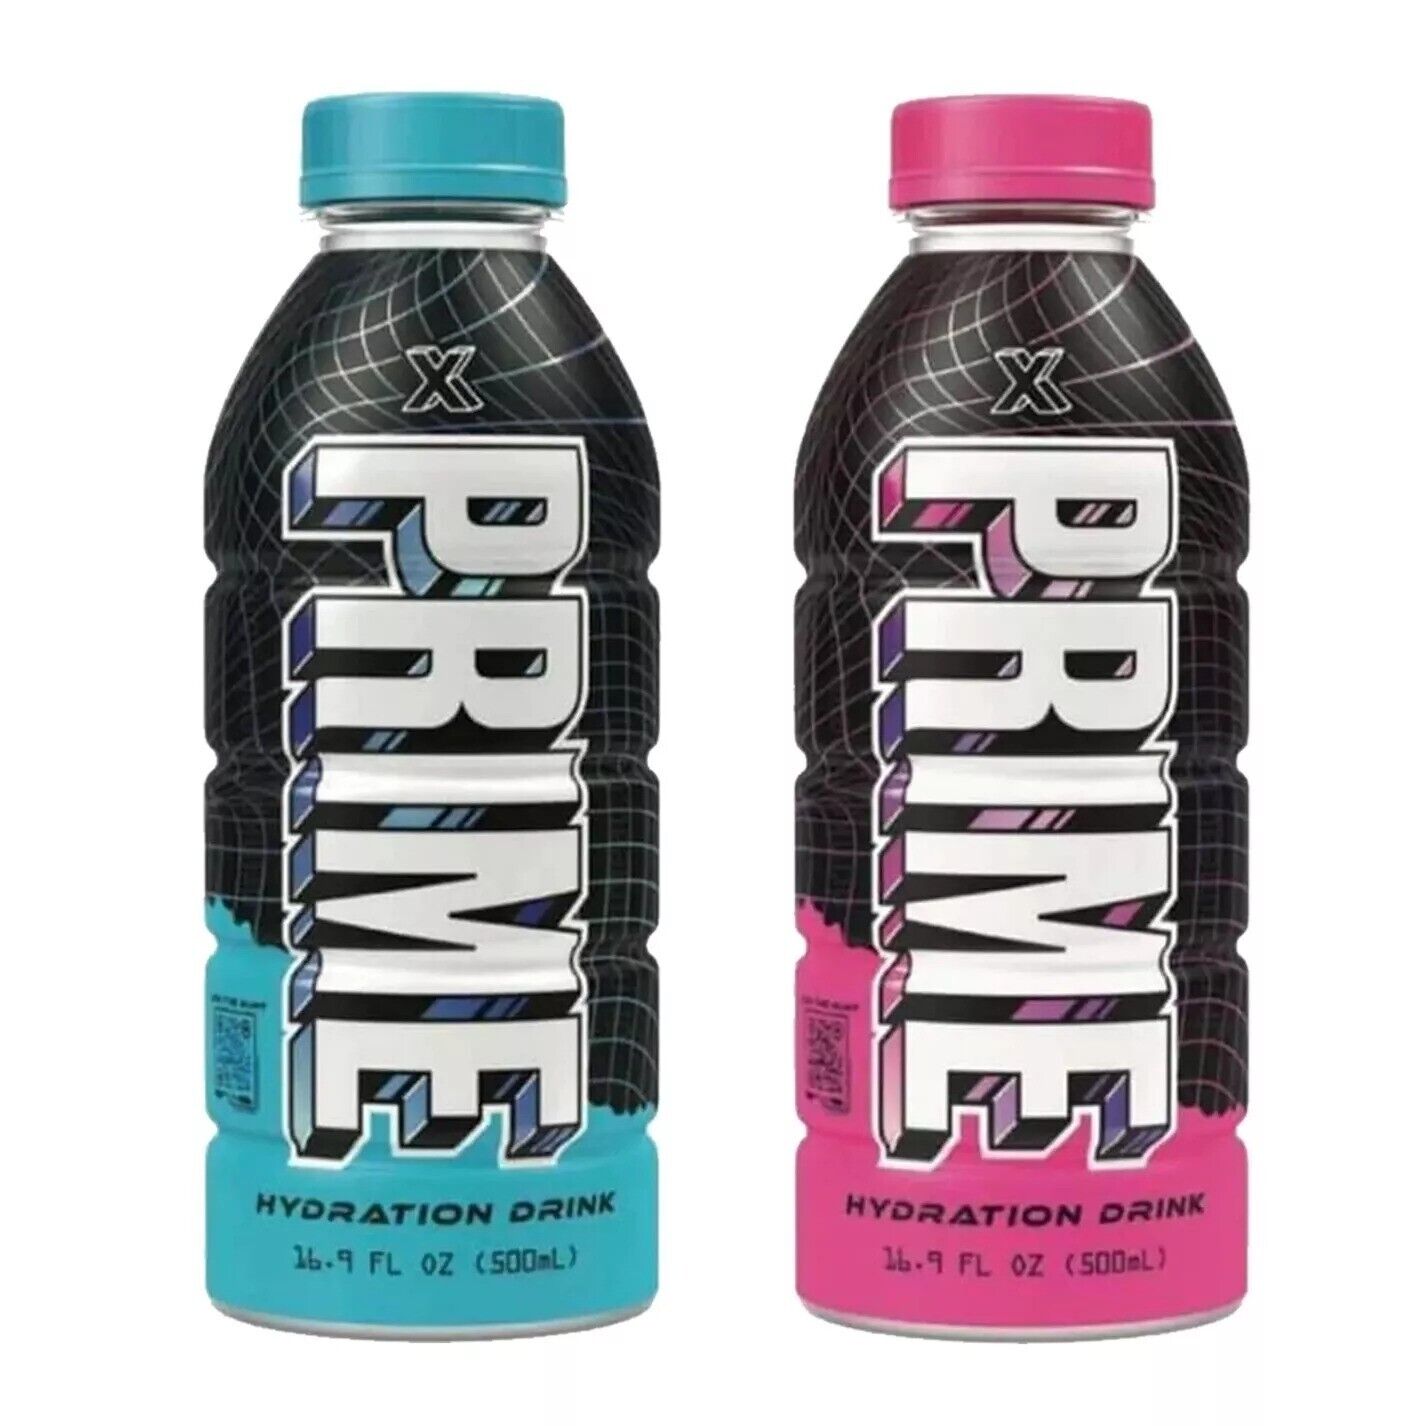 Prime Hydration X Blue & Pink Bottles PrimeX The Hunt for Hydration Pre-Order